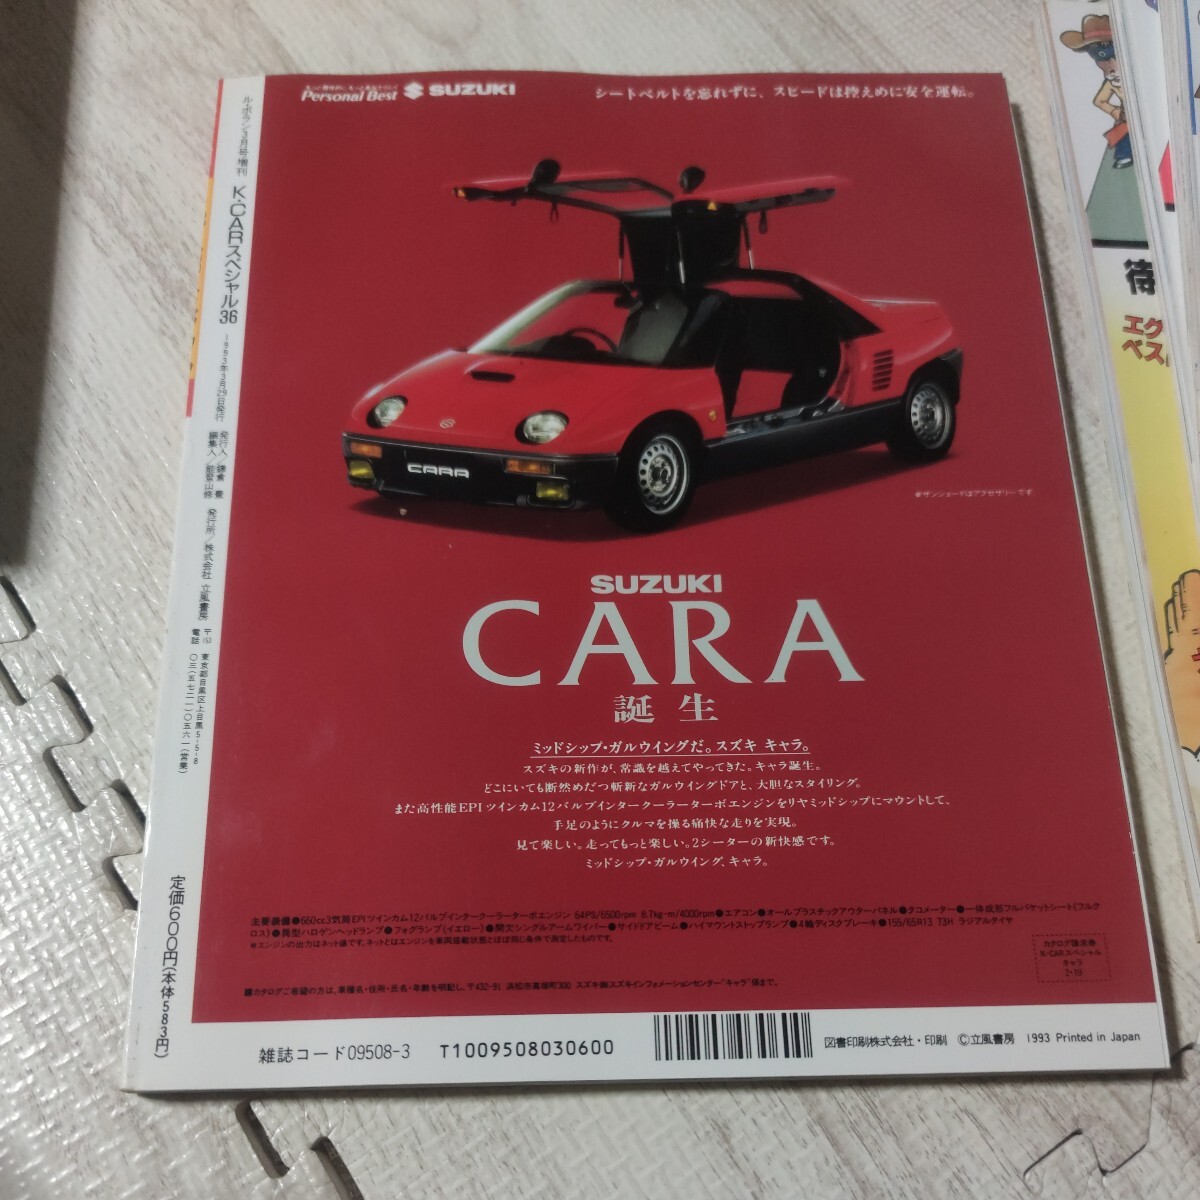 K-CARスペシャル 隔月VOL36 車 雑誌 チューンドカー カプチーノ ワークスR_画像2